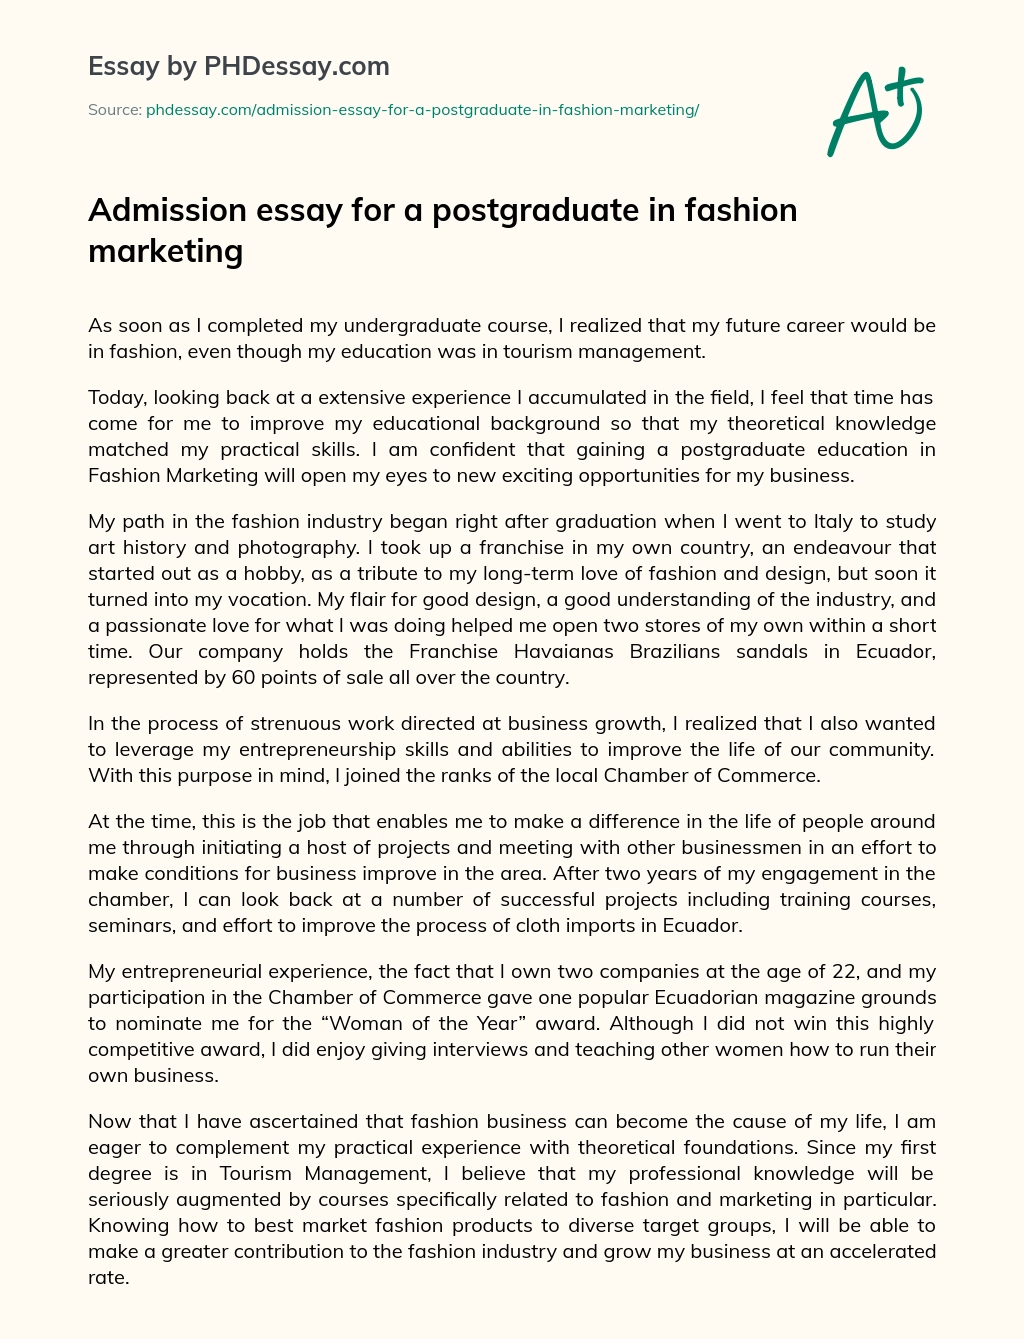 Admission essay for a postgraduate in fashion marketing essay